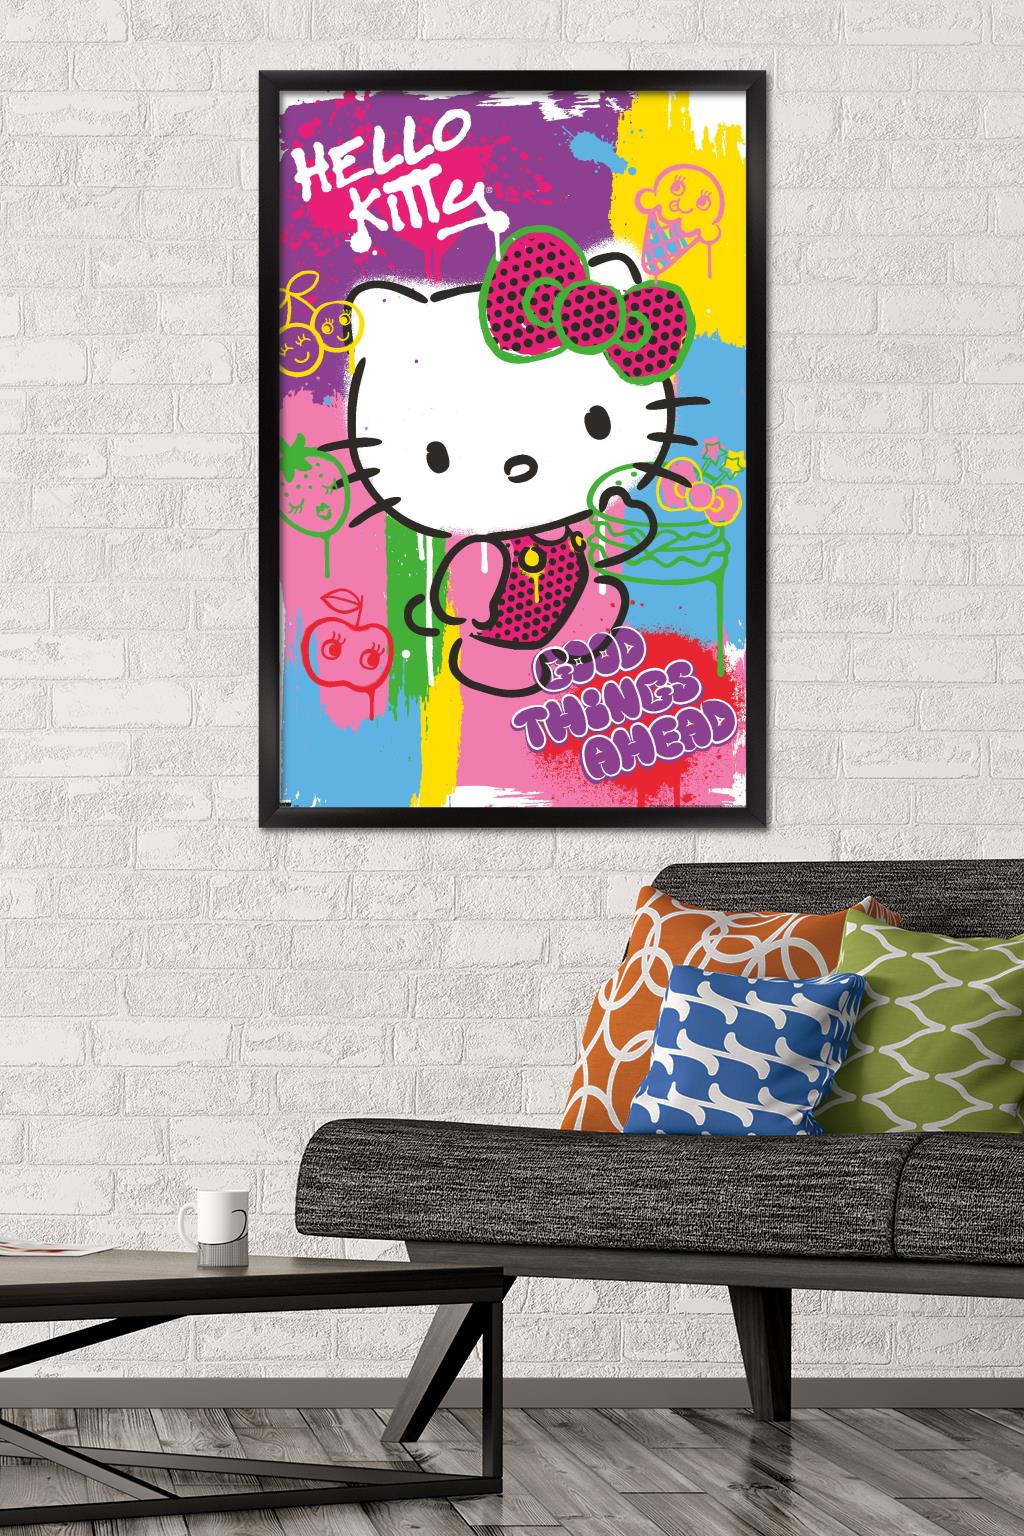 Hello Kitty - Pop Art Wall Poster, 22.375 x 34 Framed 